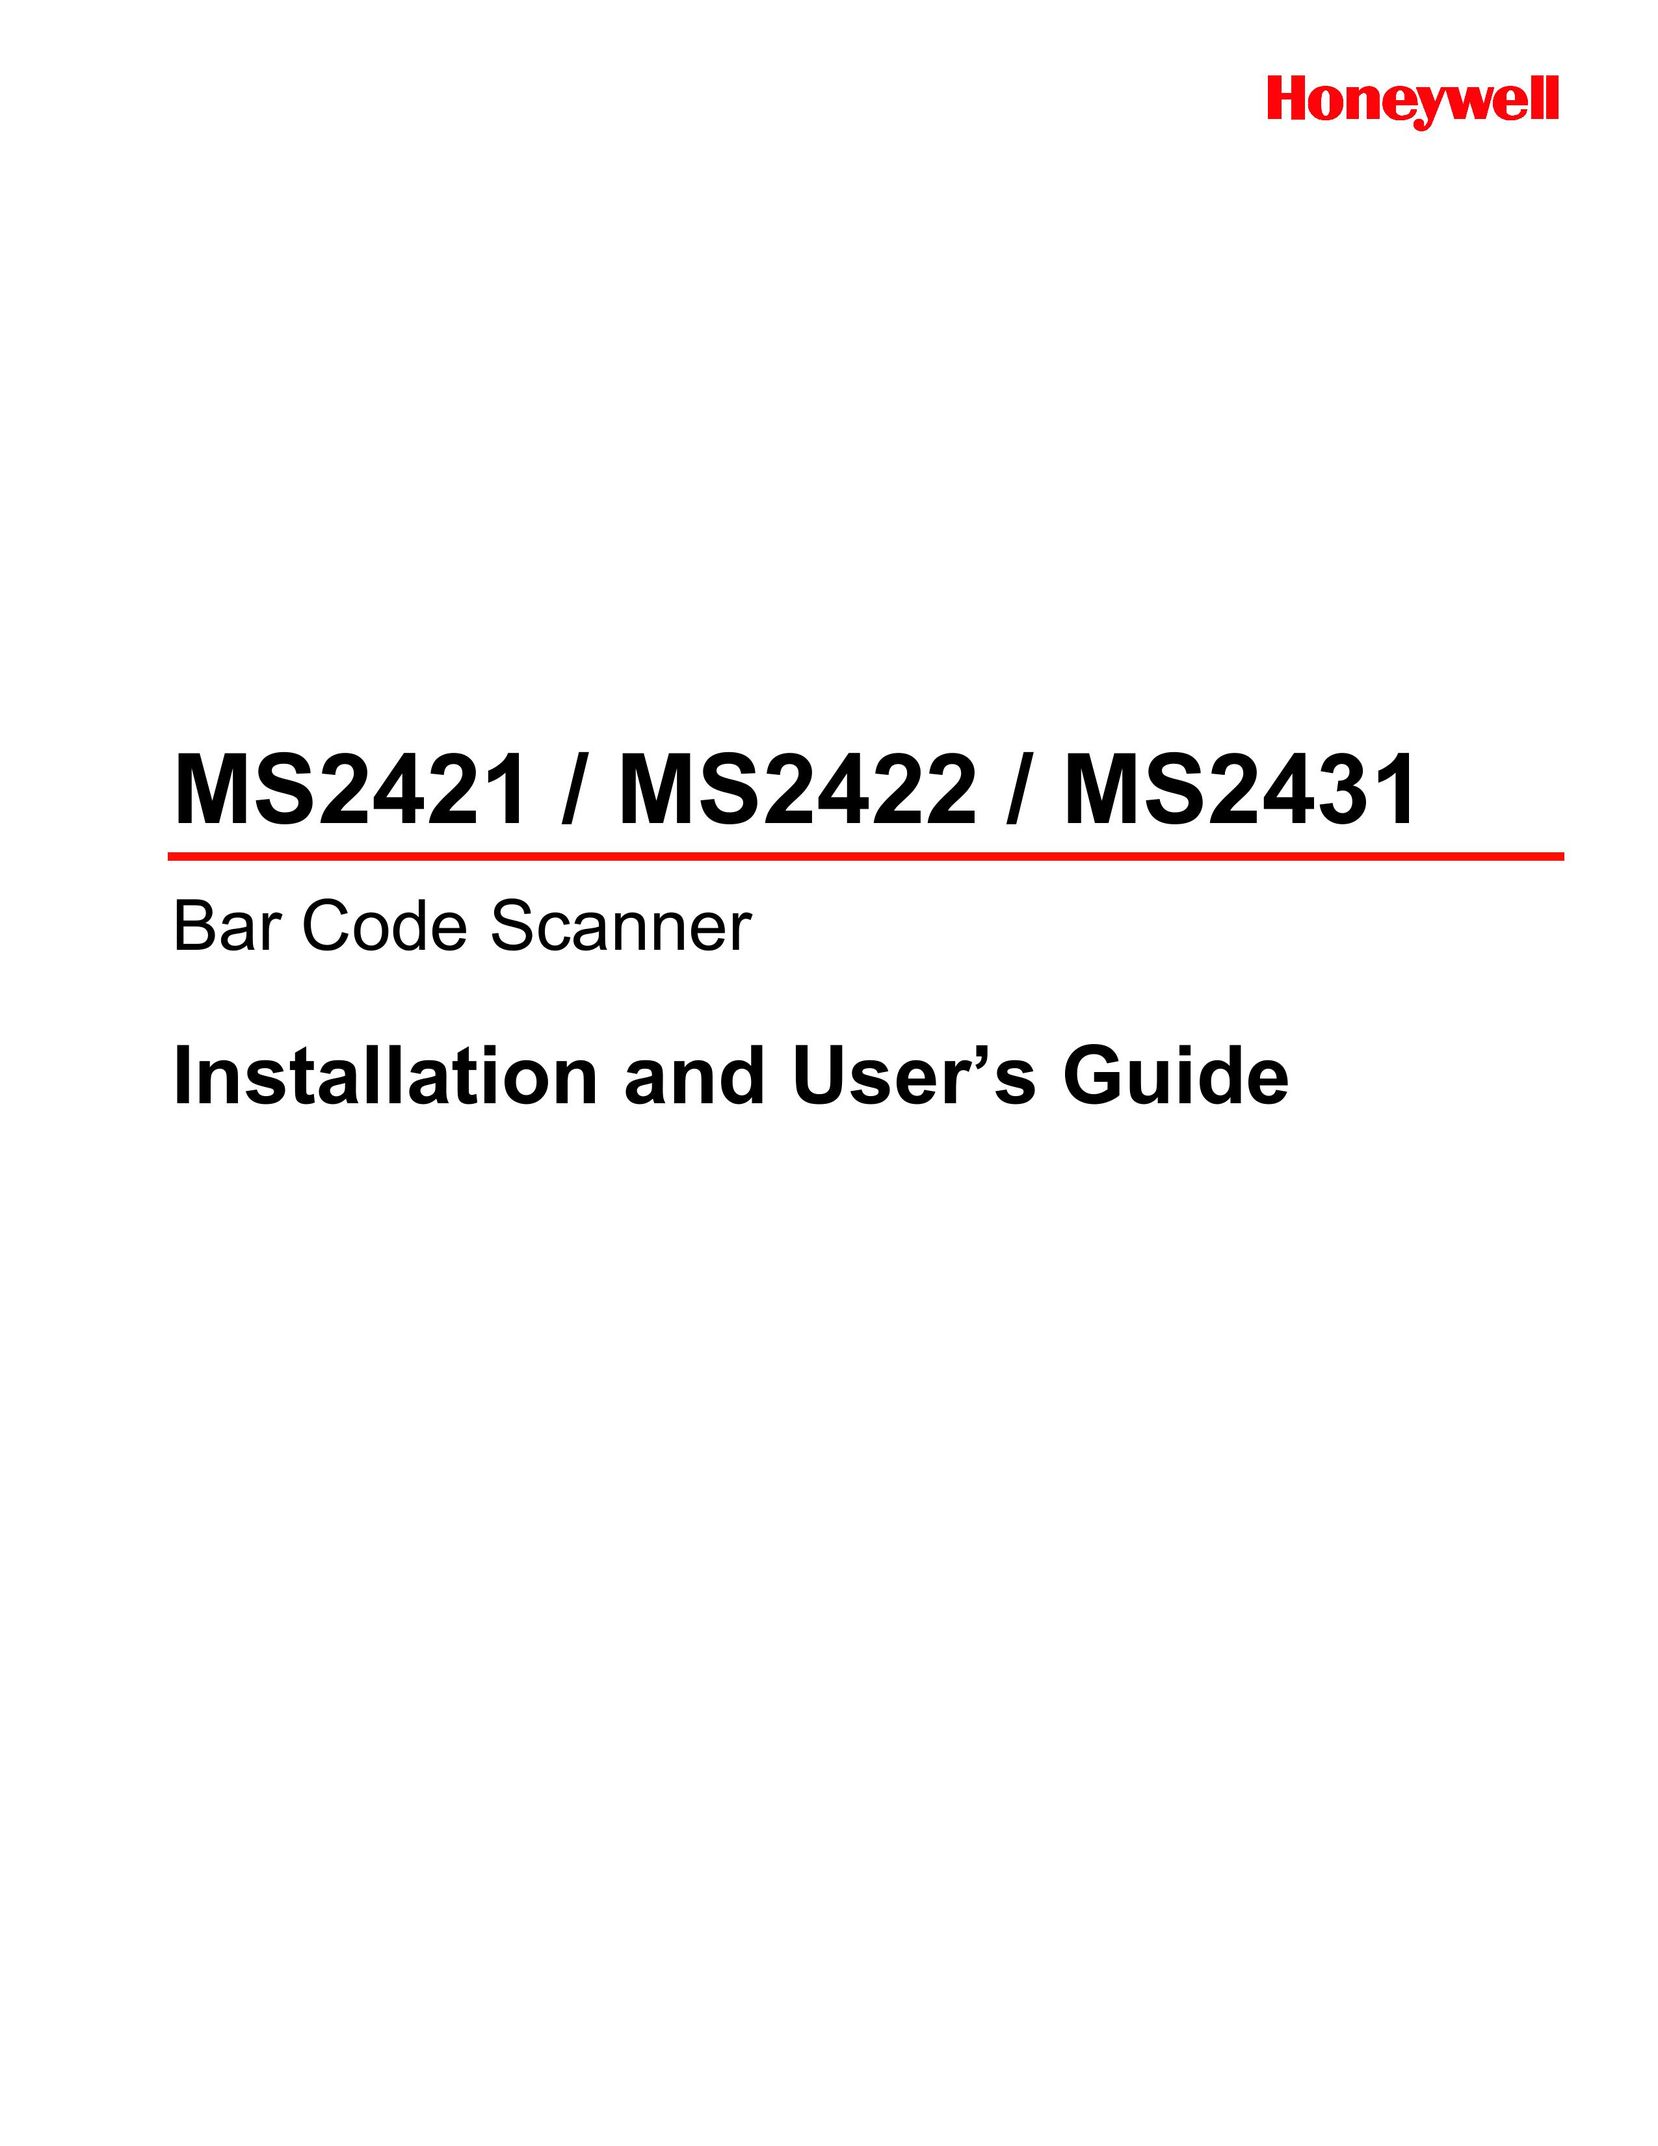 Honeywell MS2421 Barcode Reader User Manual